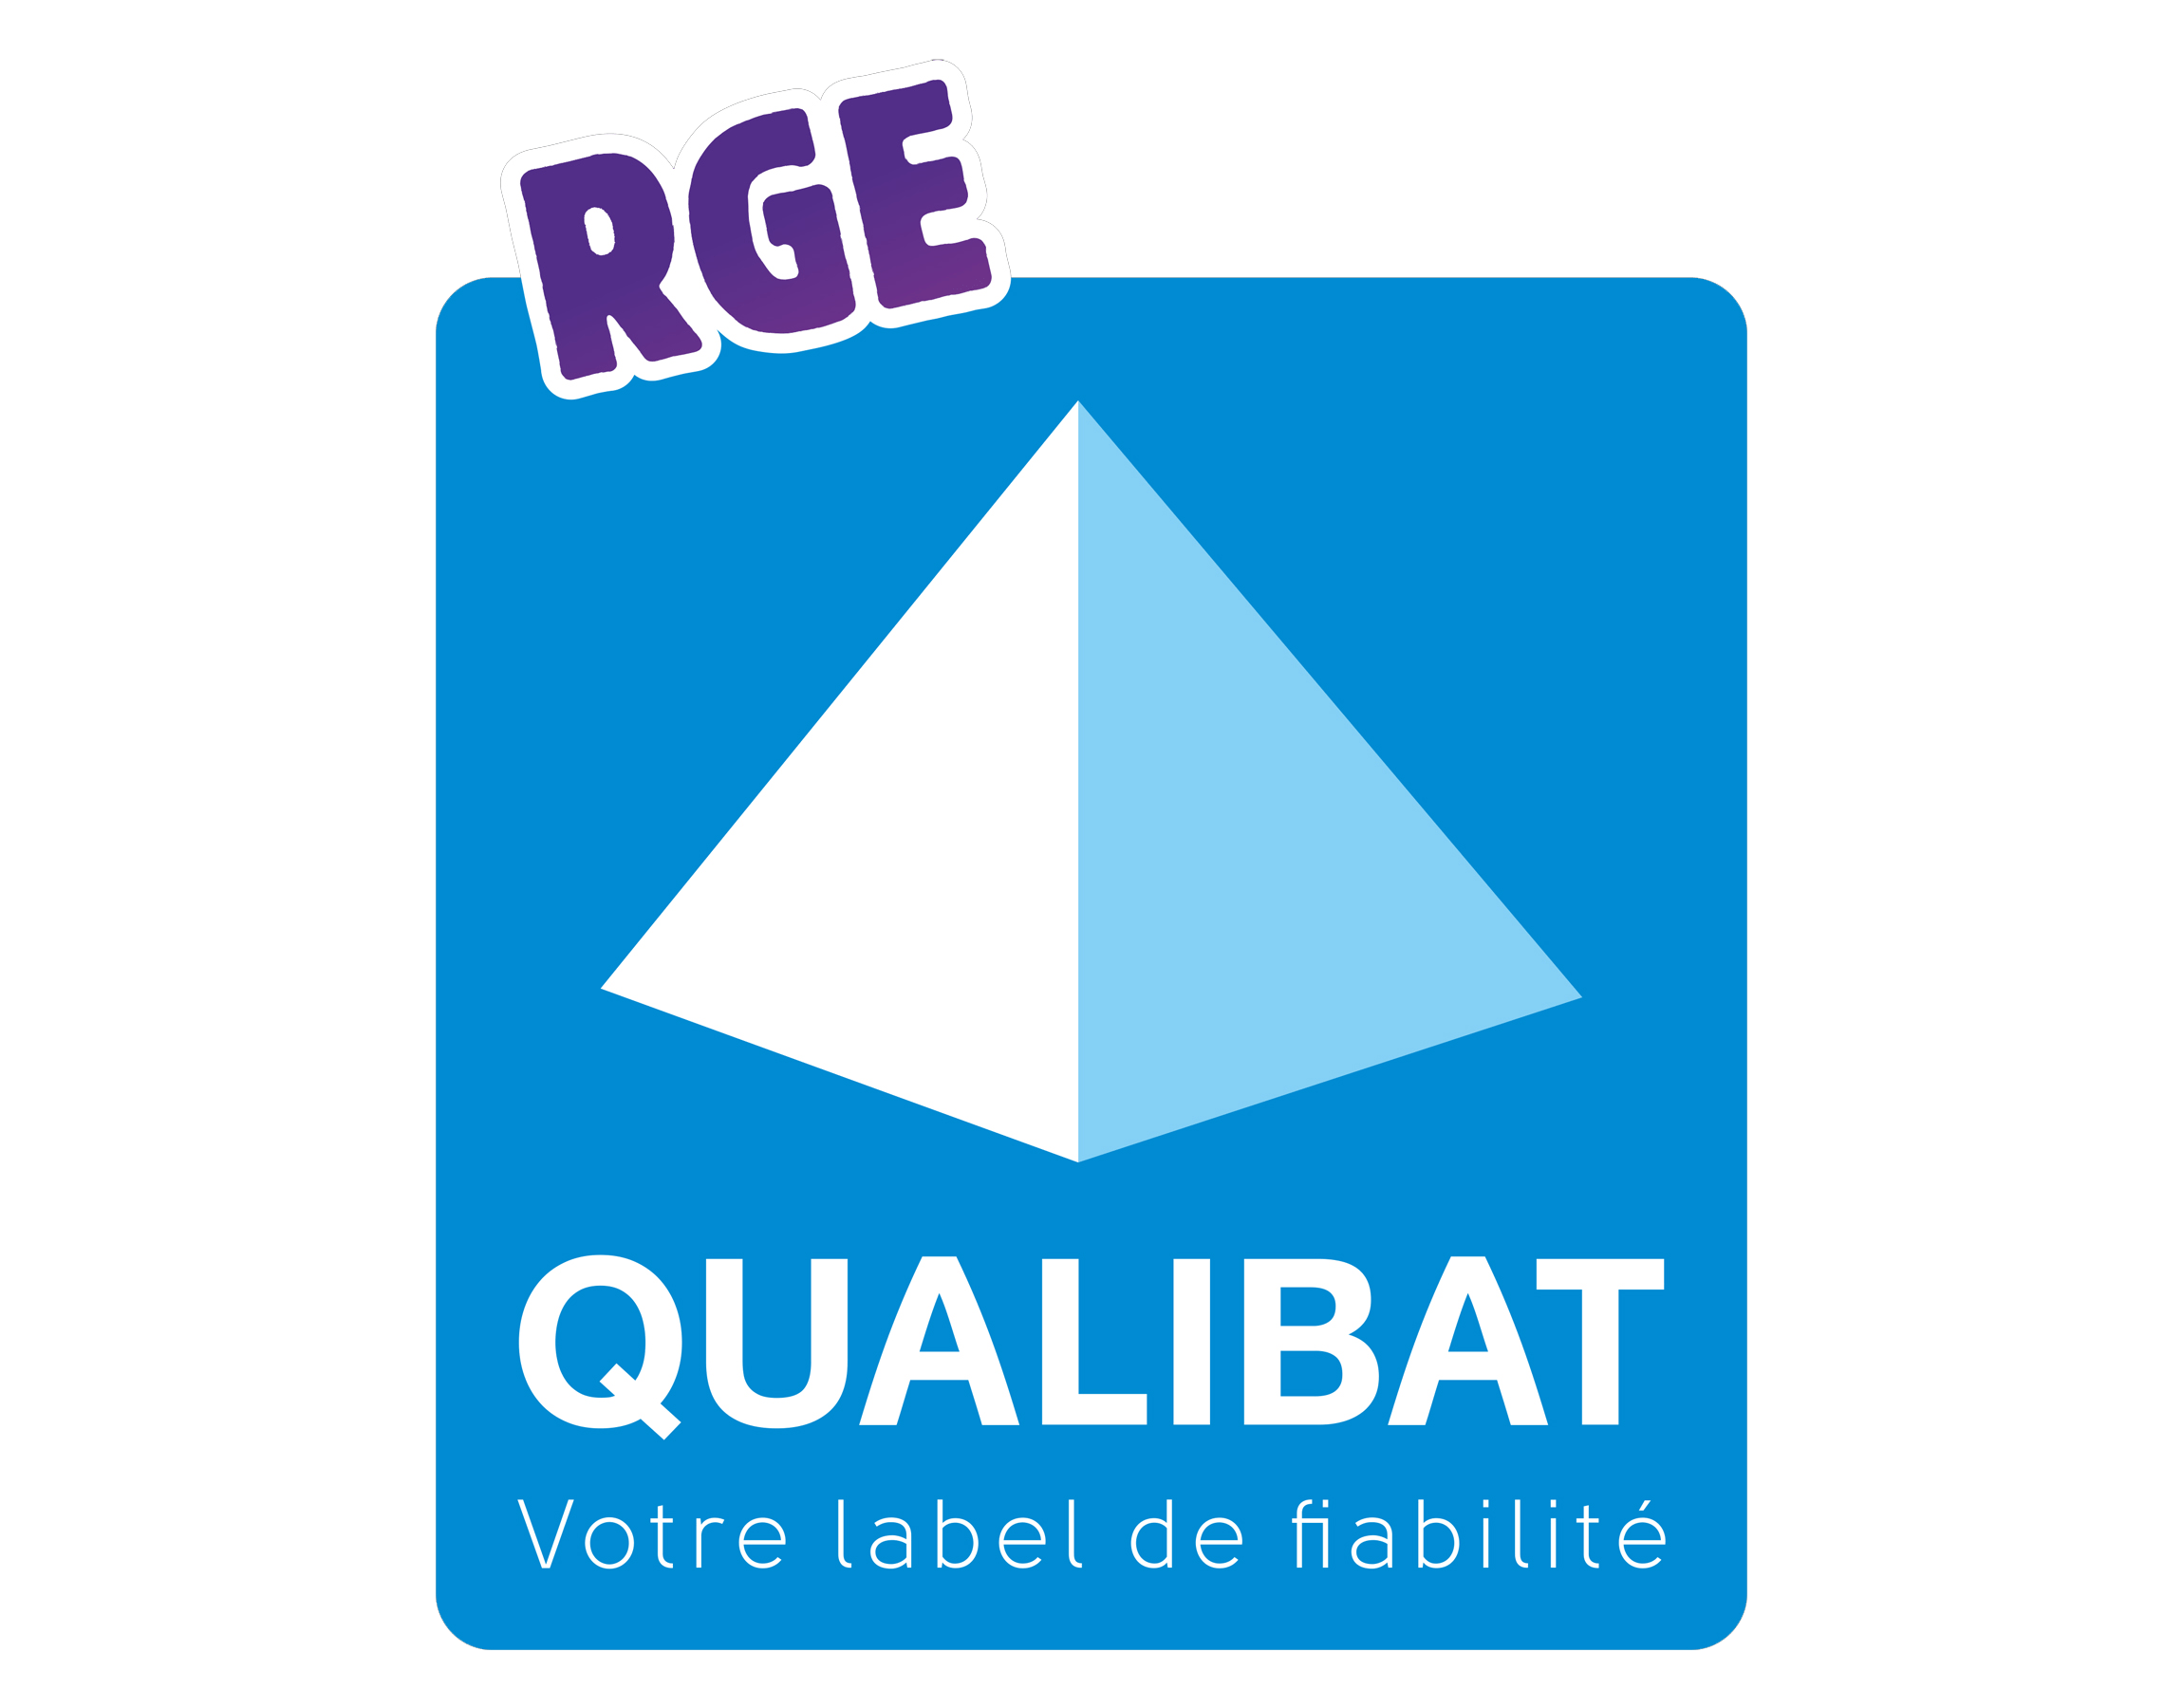 Logo Qualibat RGE